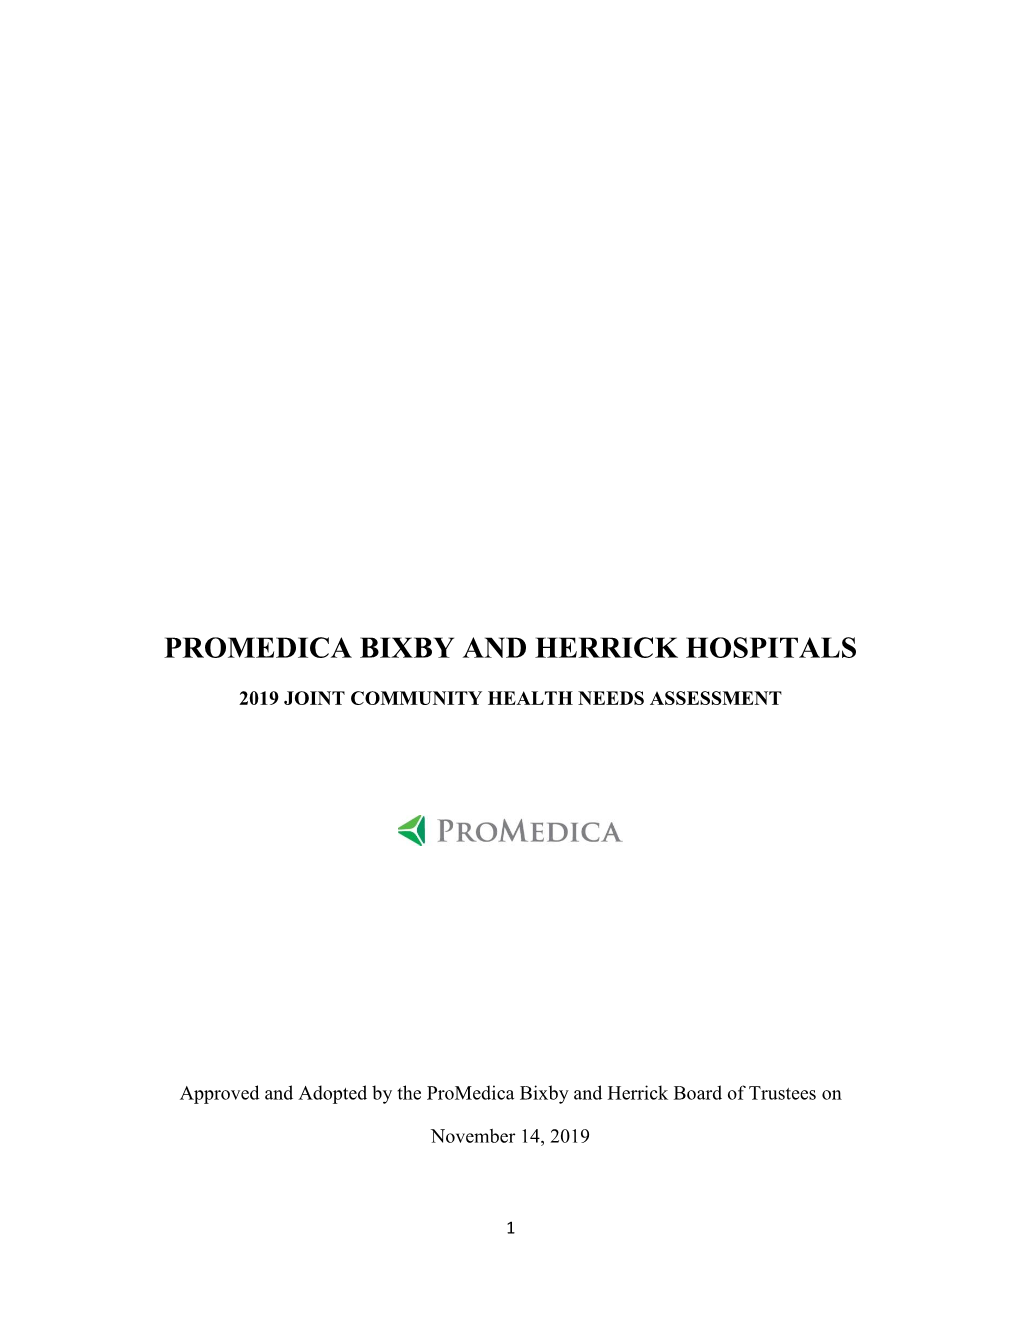 Promedica Bixby and Herrick Hospitals